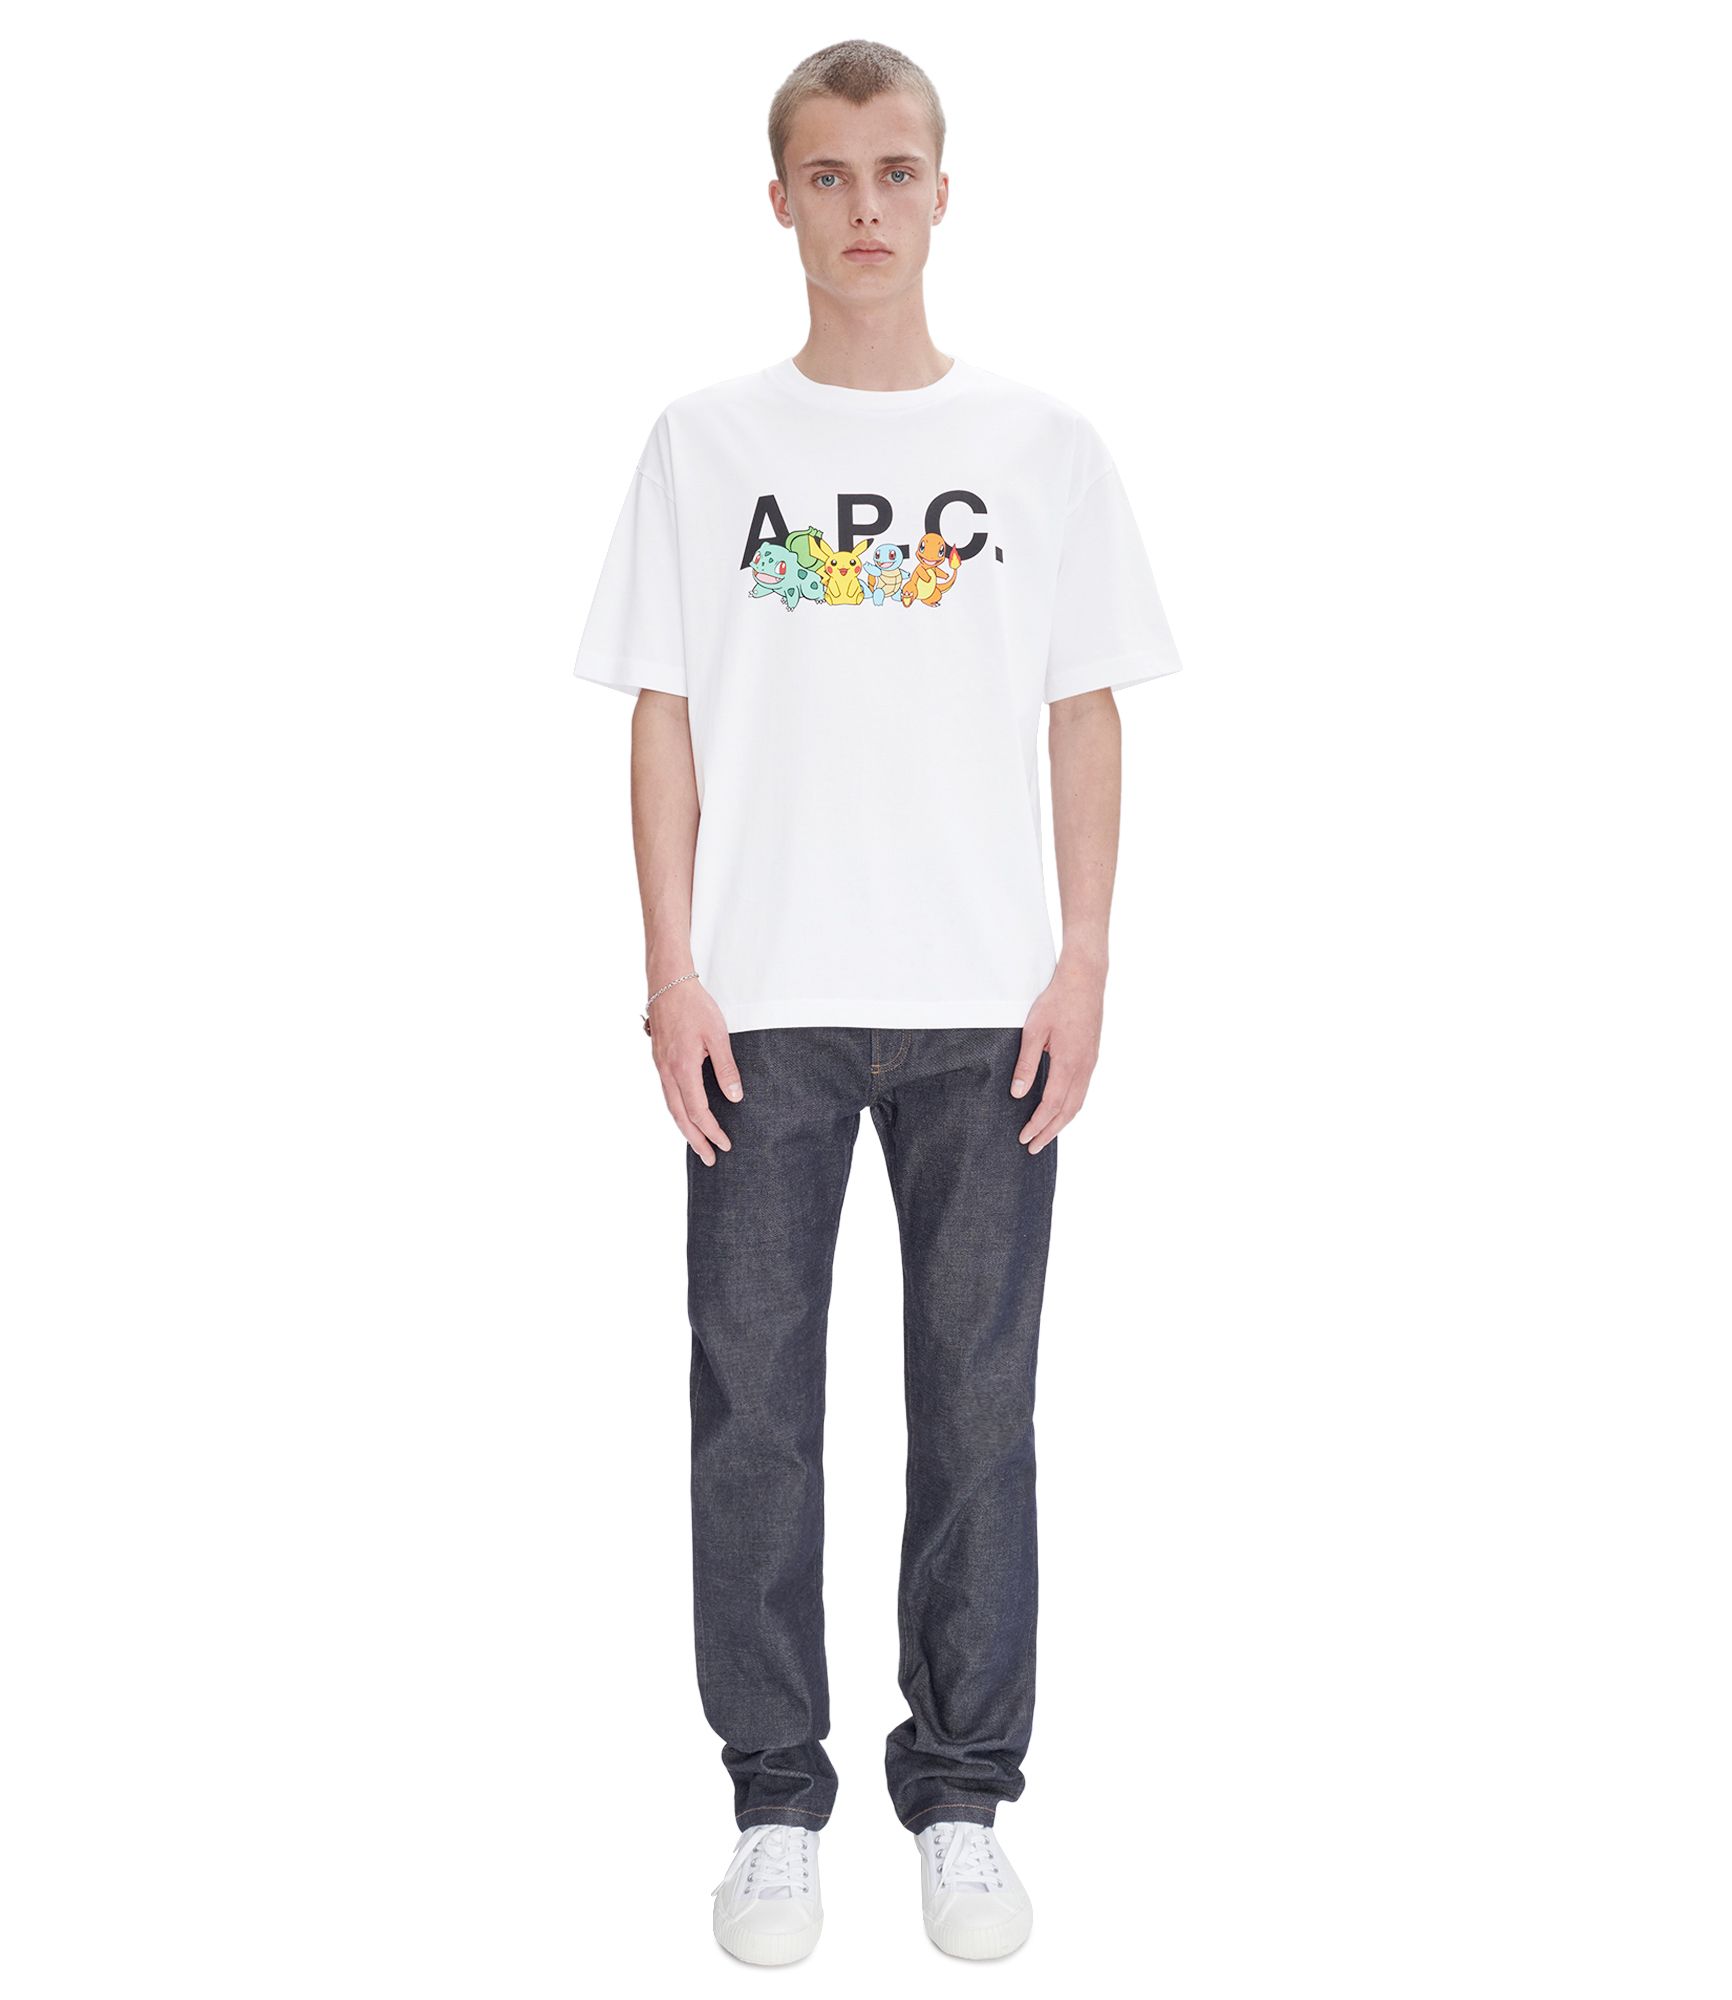 A.P.C 아페쎄 포켓몬 The 크루 H 티셔츠 WHITE울랄라 편집샵